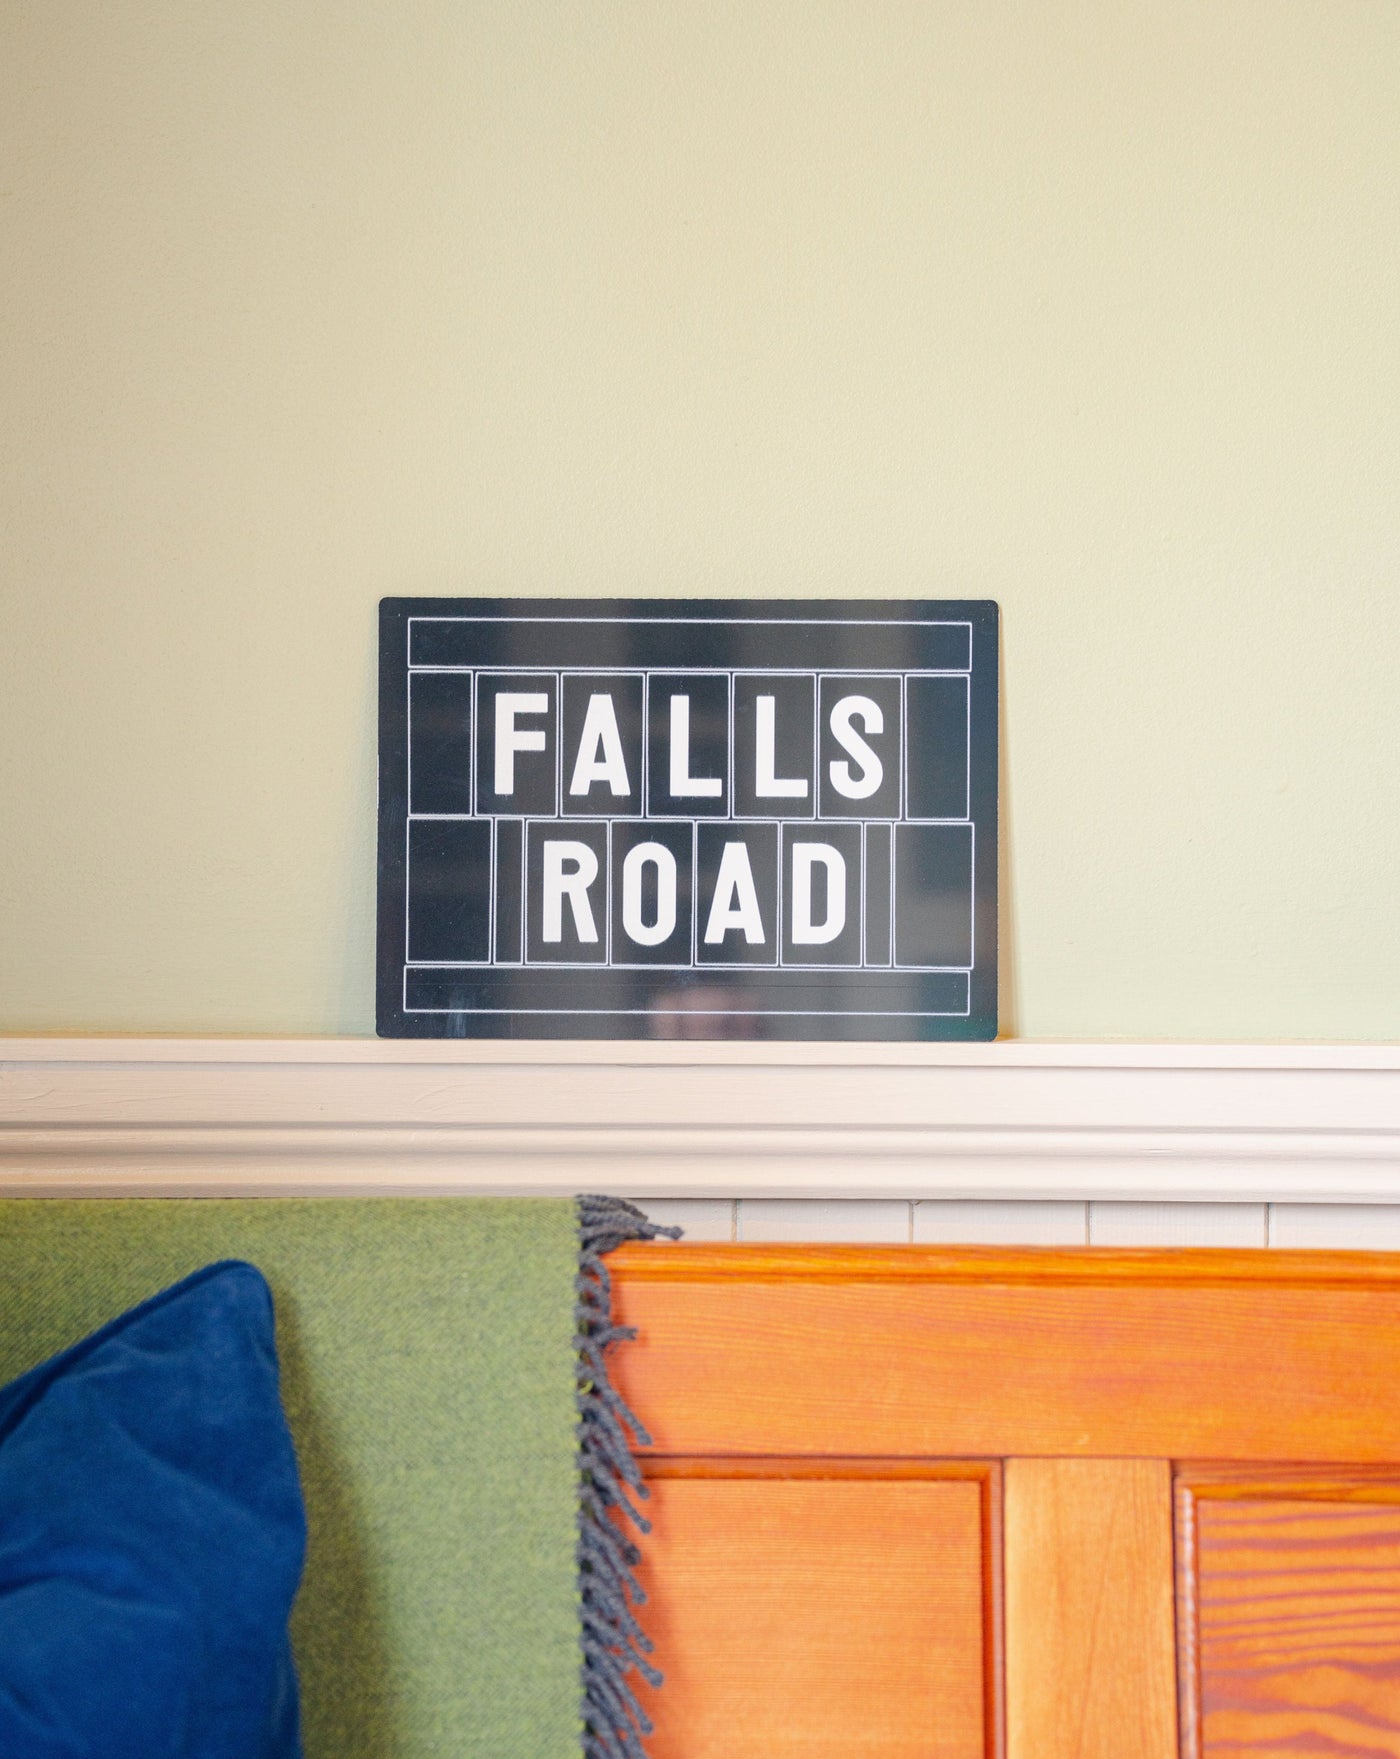 Falls Road Street Sign